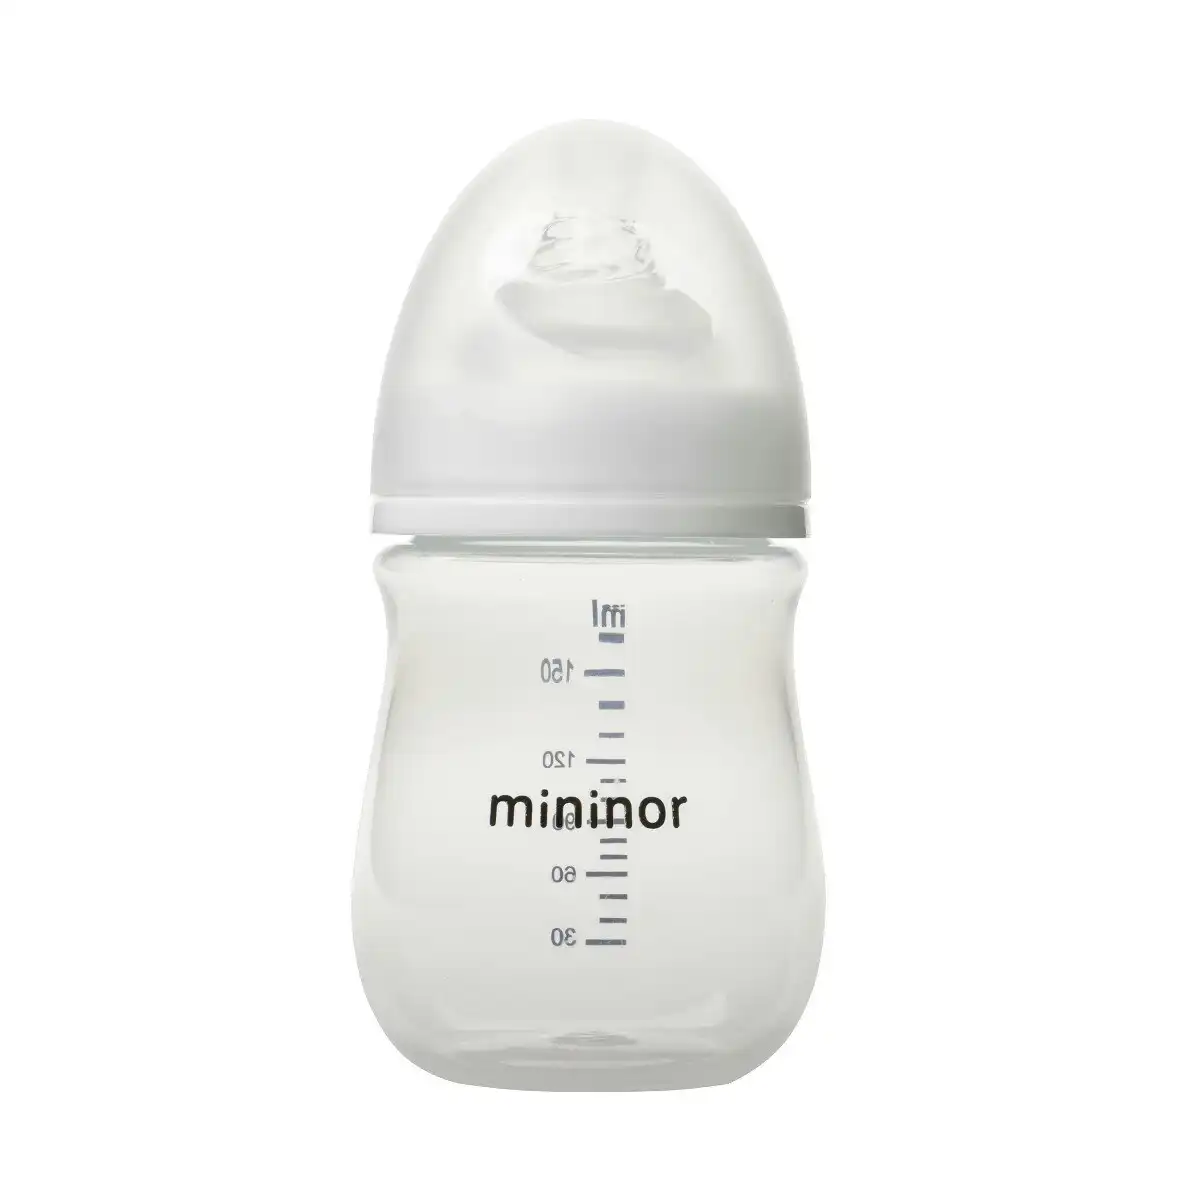 Mininor Baby/Infant 160ml PP Feeding Bottle w/ Anti-Colic Silicone Teat Clear